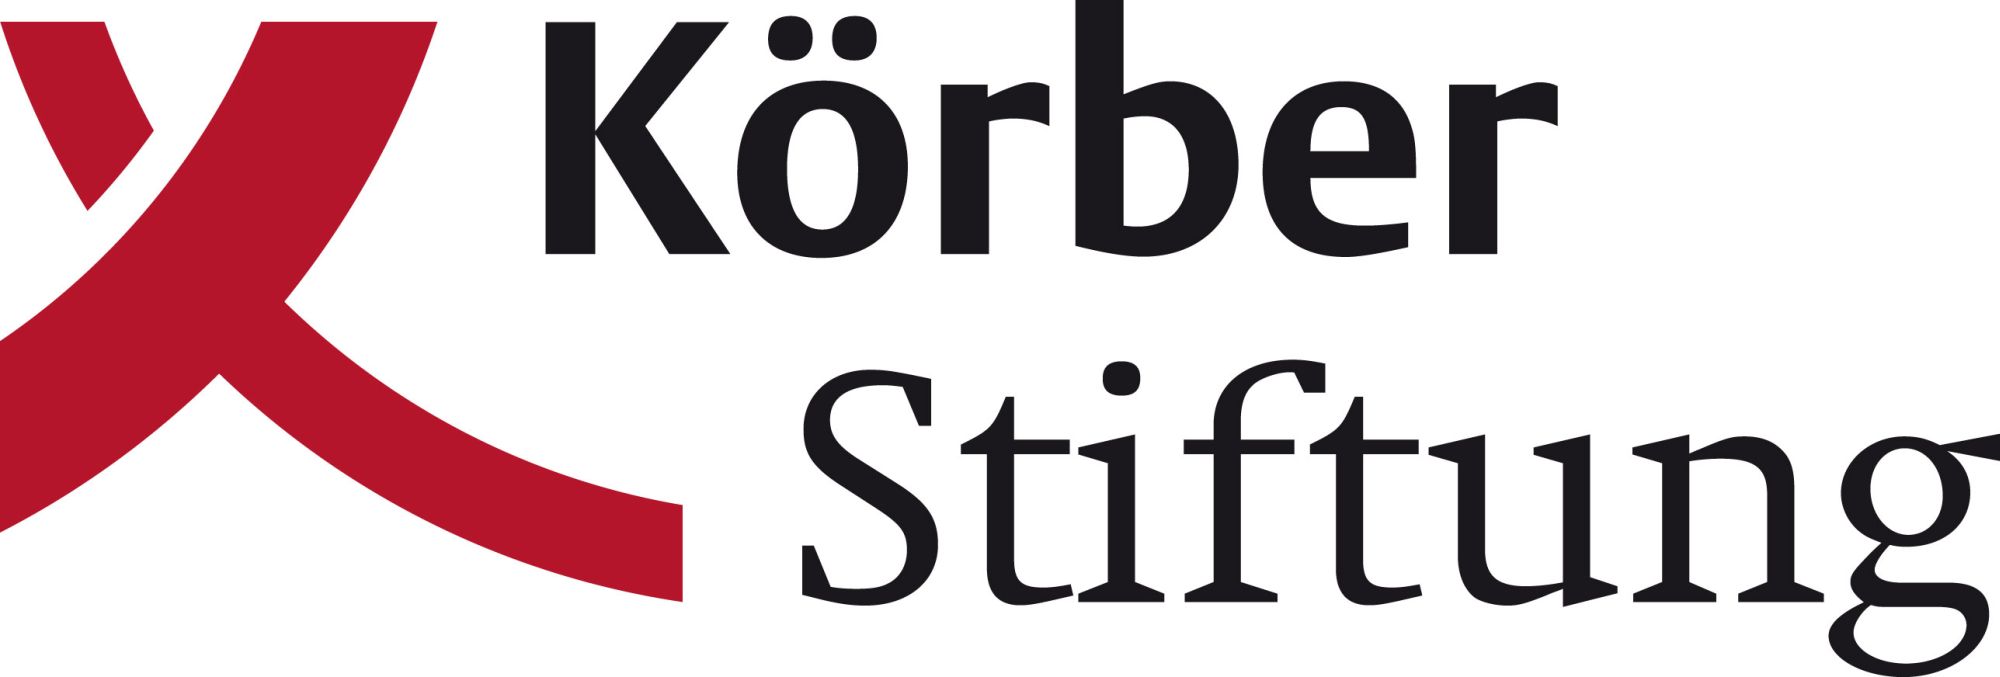 Logo: Körber-Stiftung